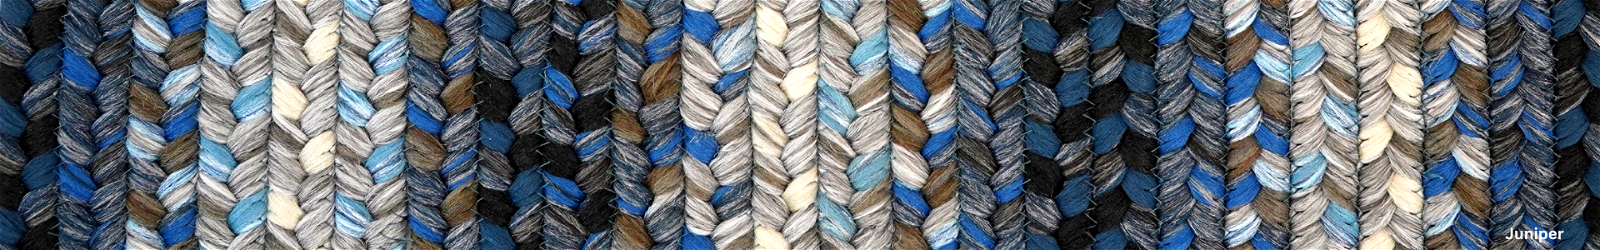 10 x 10 - Blue Braided Rugs